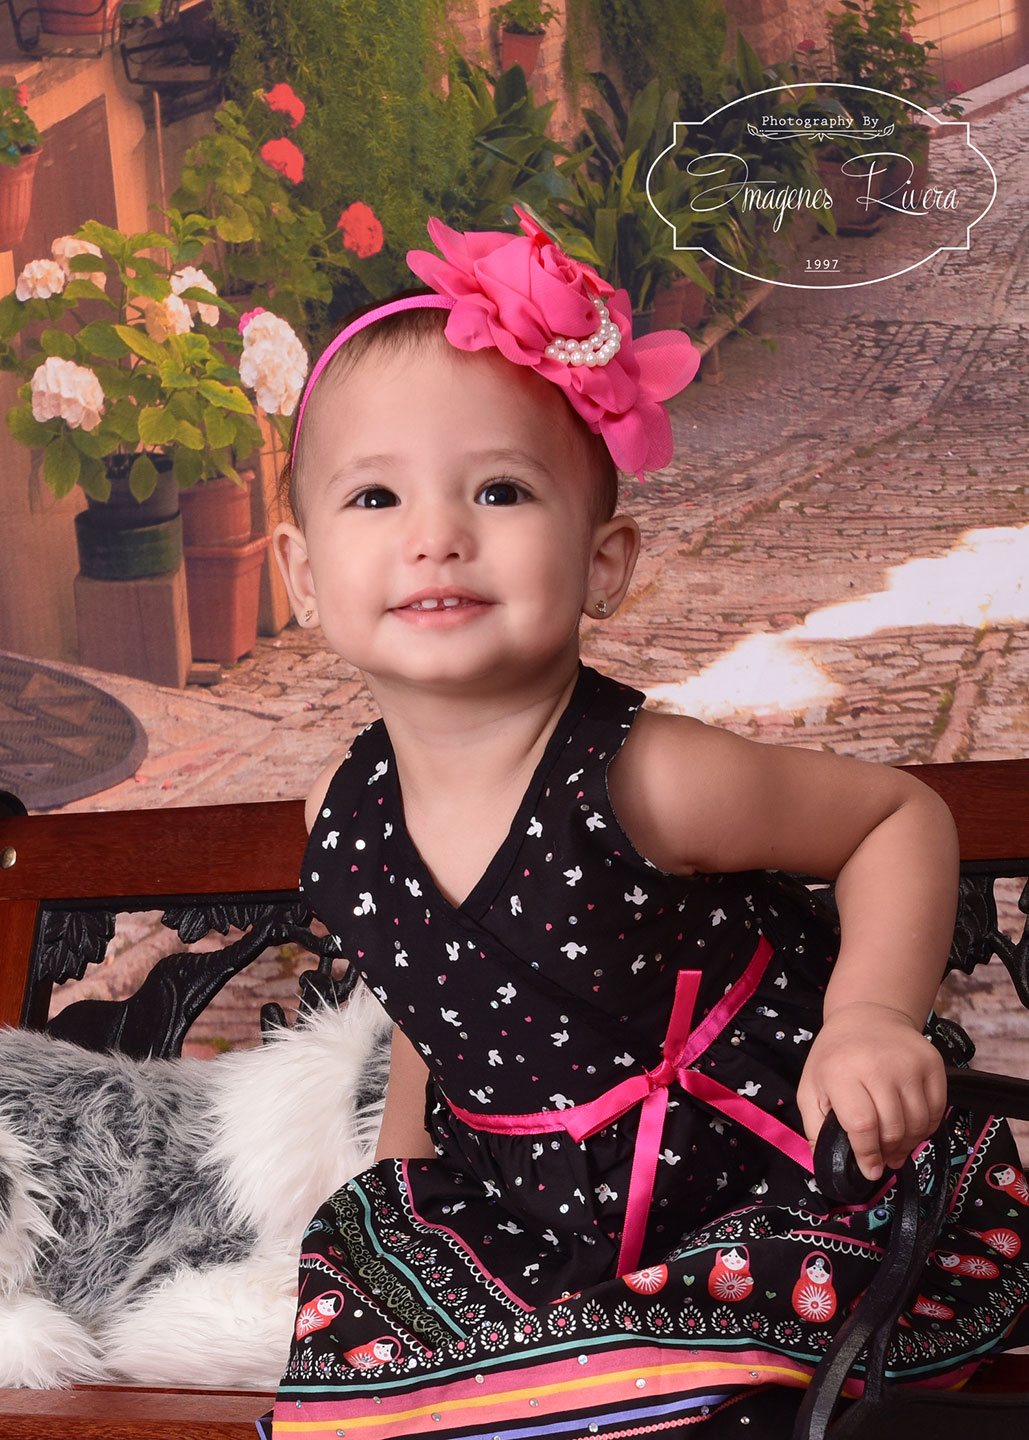 ♥ Alejandra is 1 year old | Miami Children Photographer Imagenes Rivera ♥